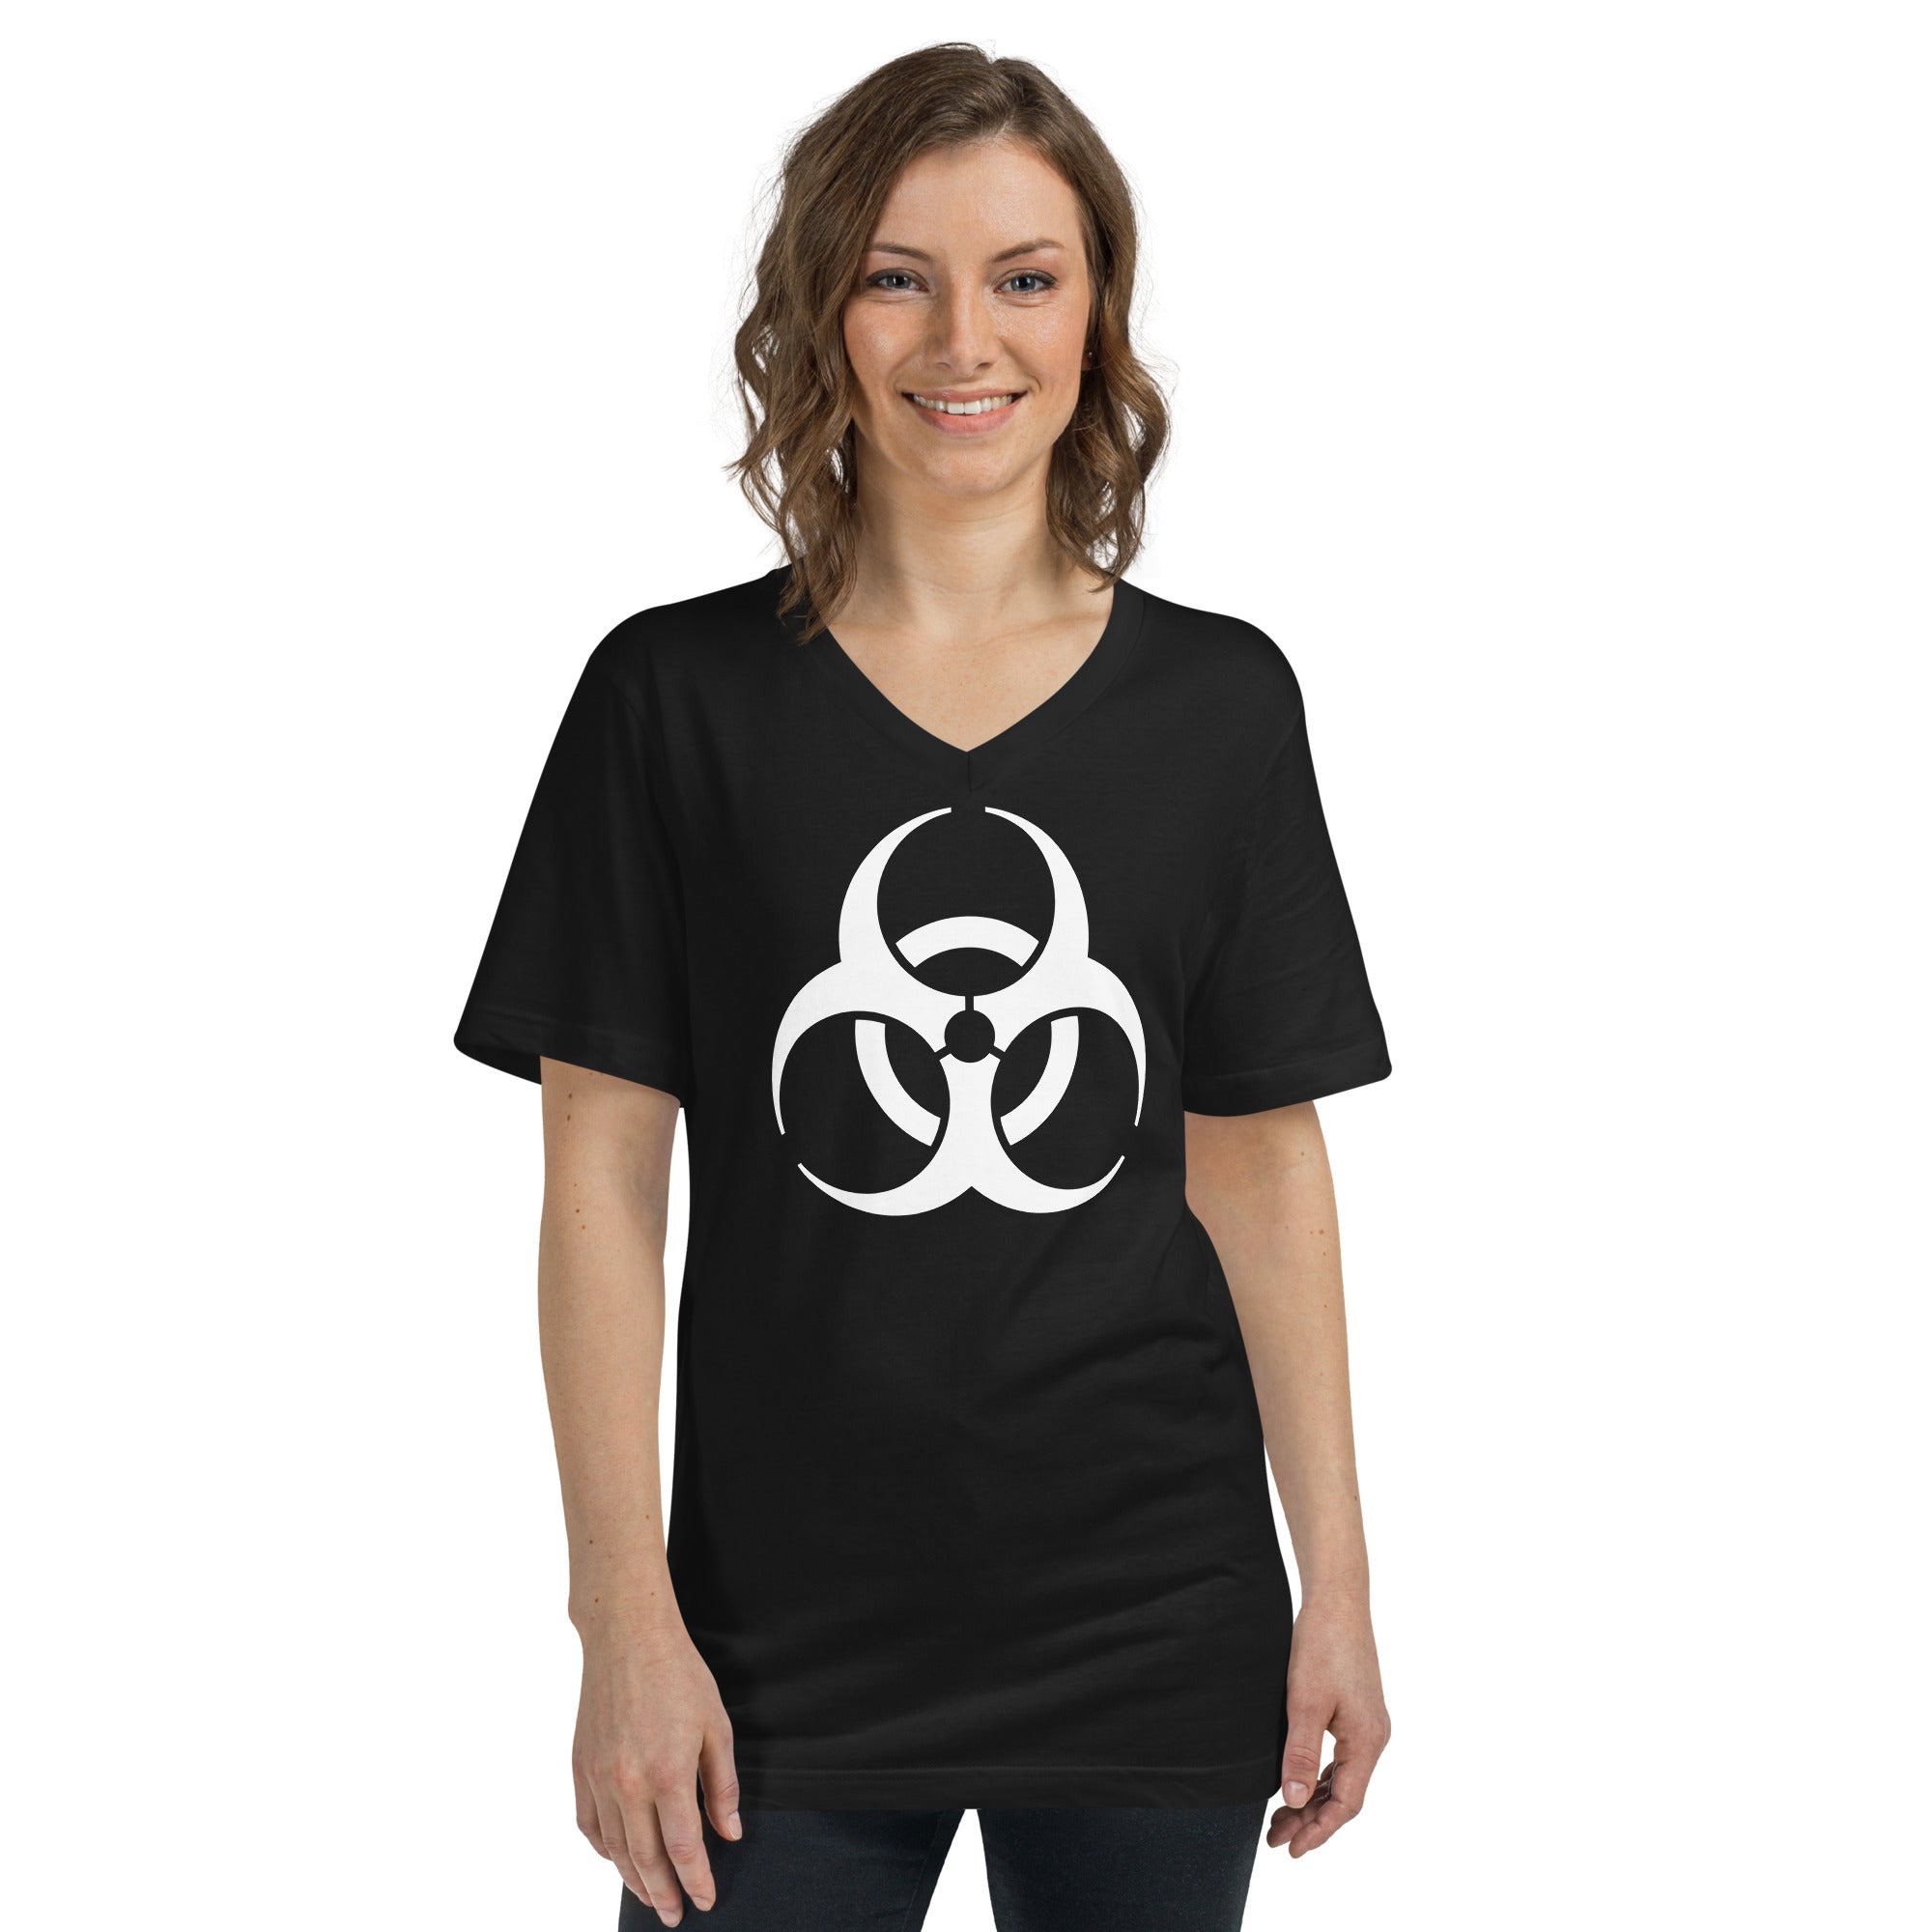 White Biohazard Sign Toxic Chemical Symbol Women’s Short Sleeve V-Neck T-Shirt